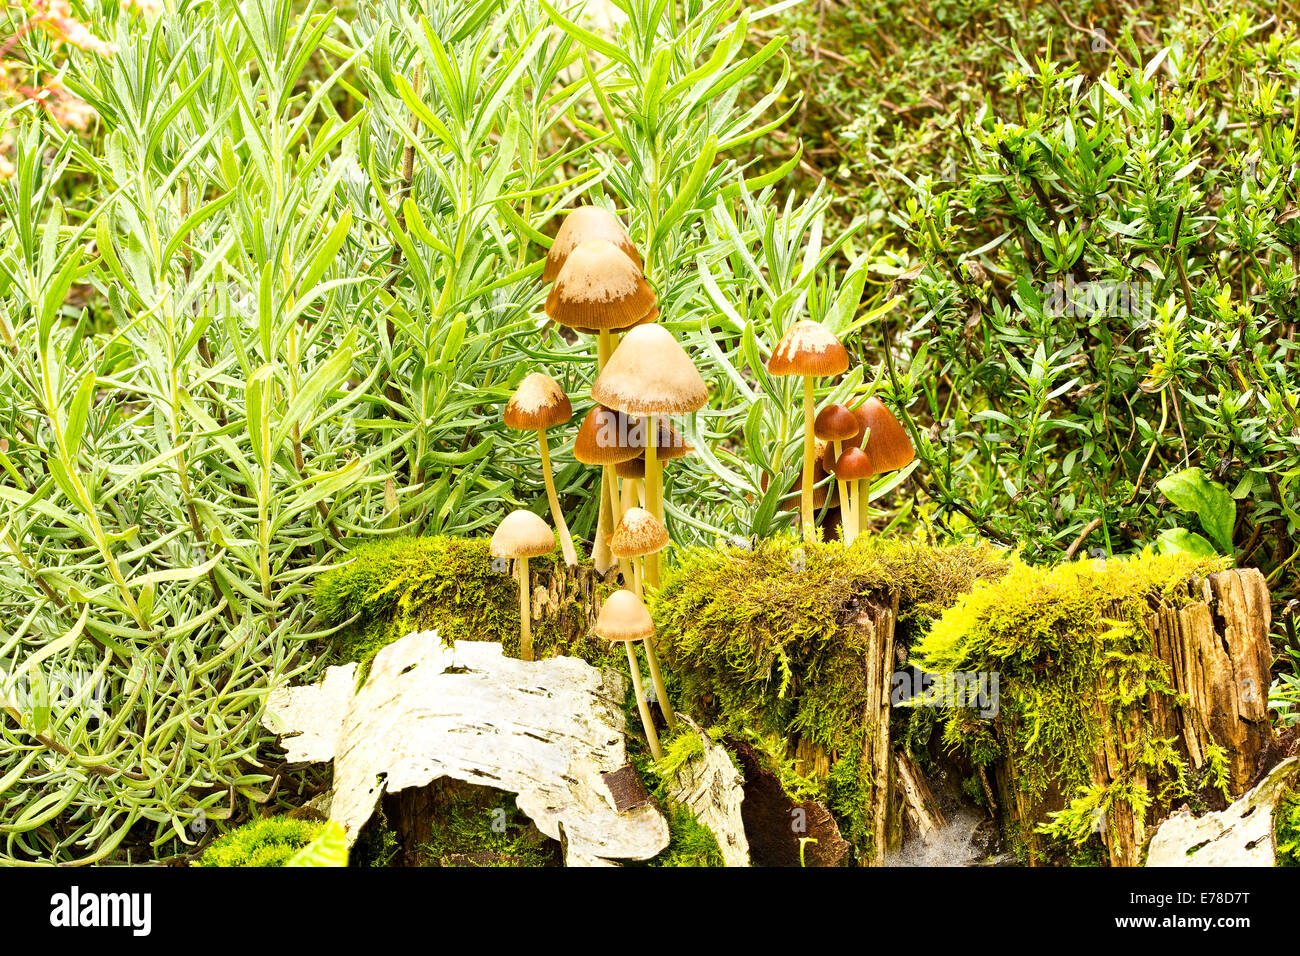 Small mushrooms Stock Photo